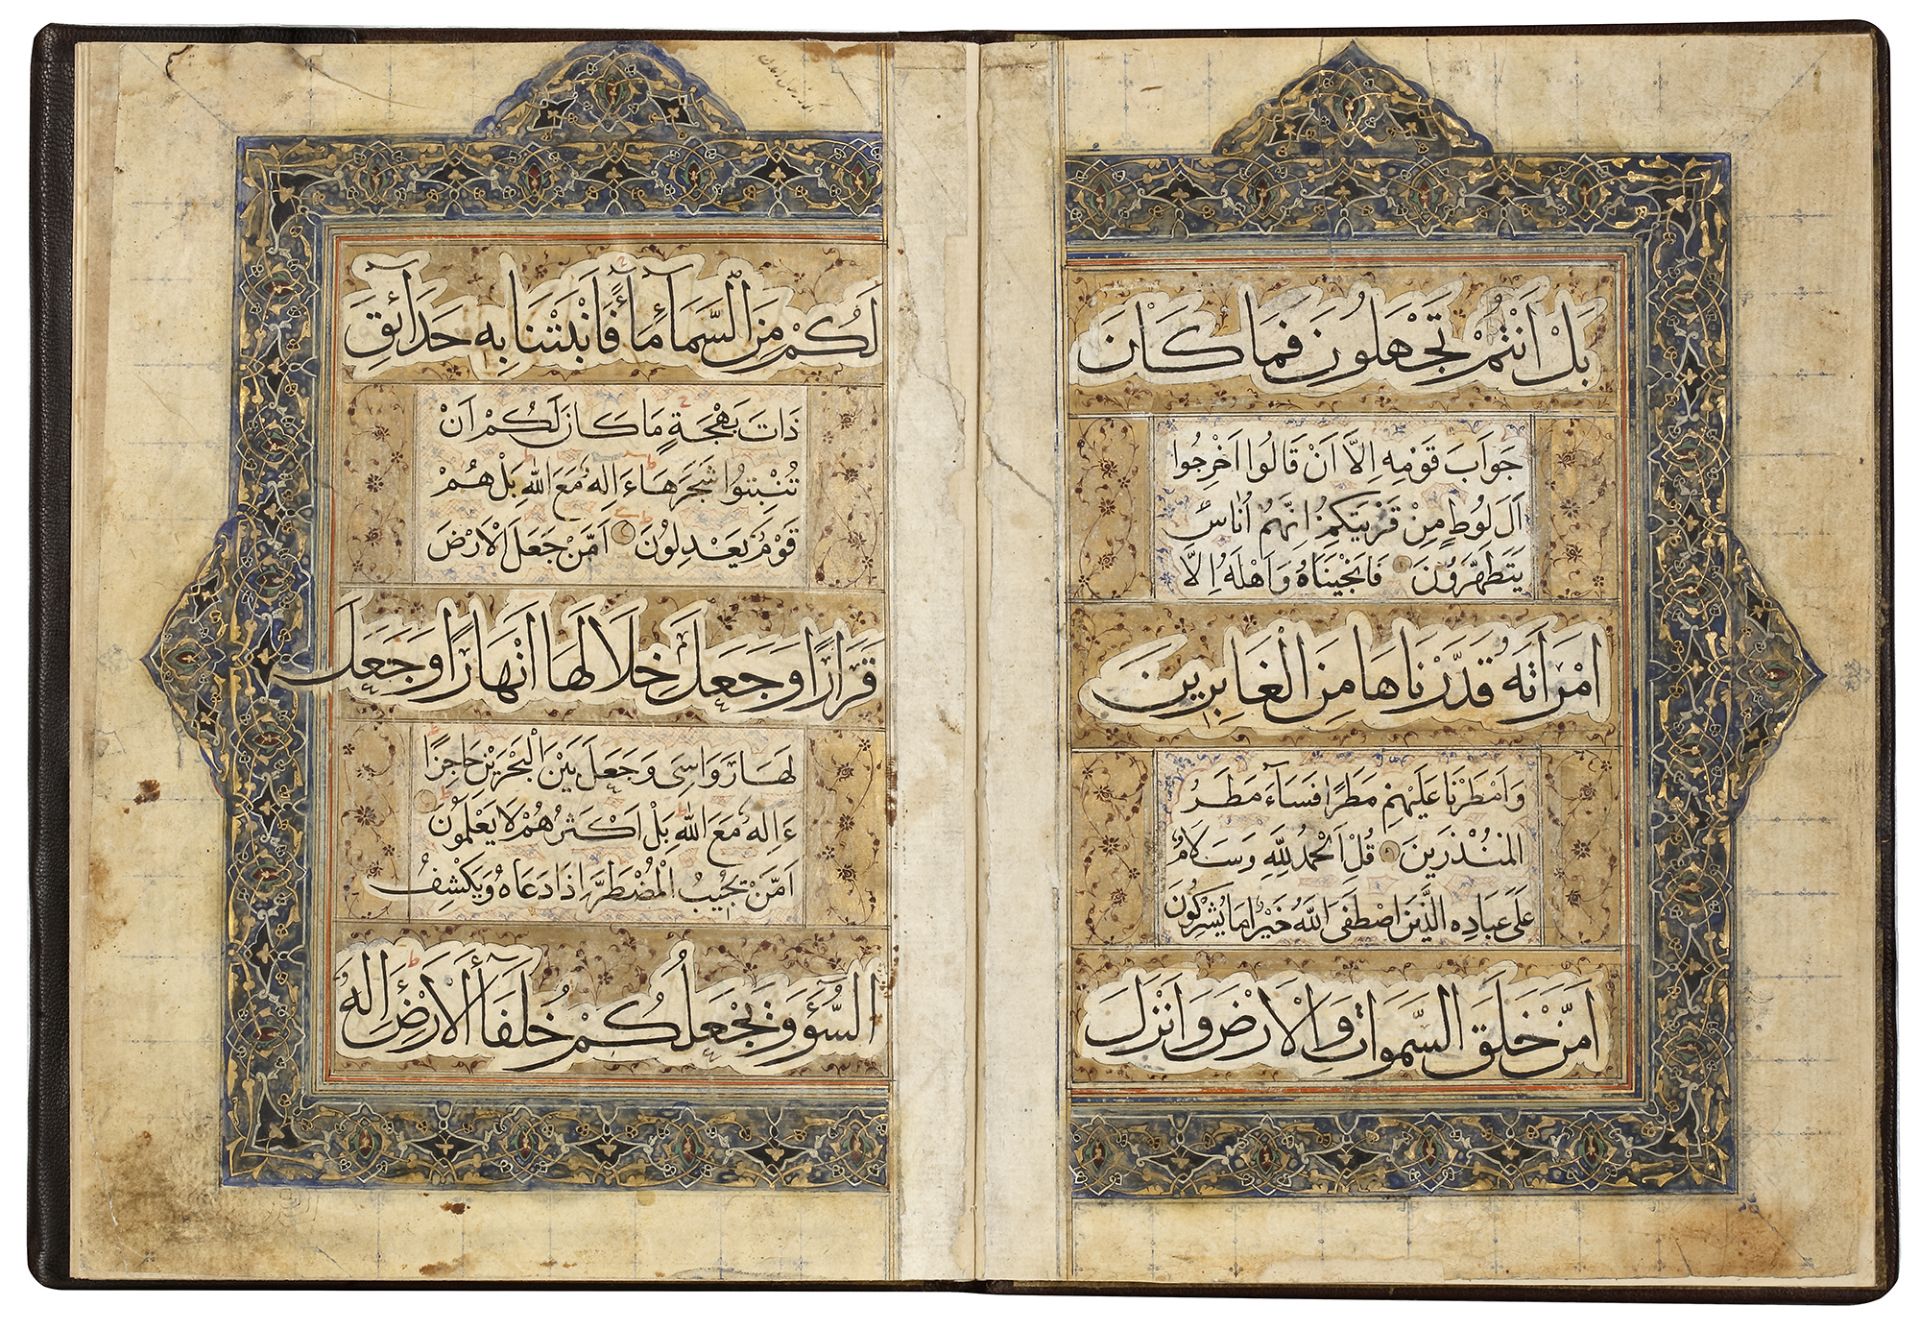 A LATE TIMURID QURAN JUZ, BY AHMED AL-RUMI IN 858 AH/1454 AD